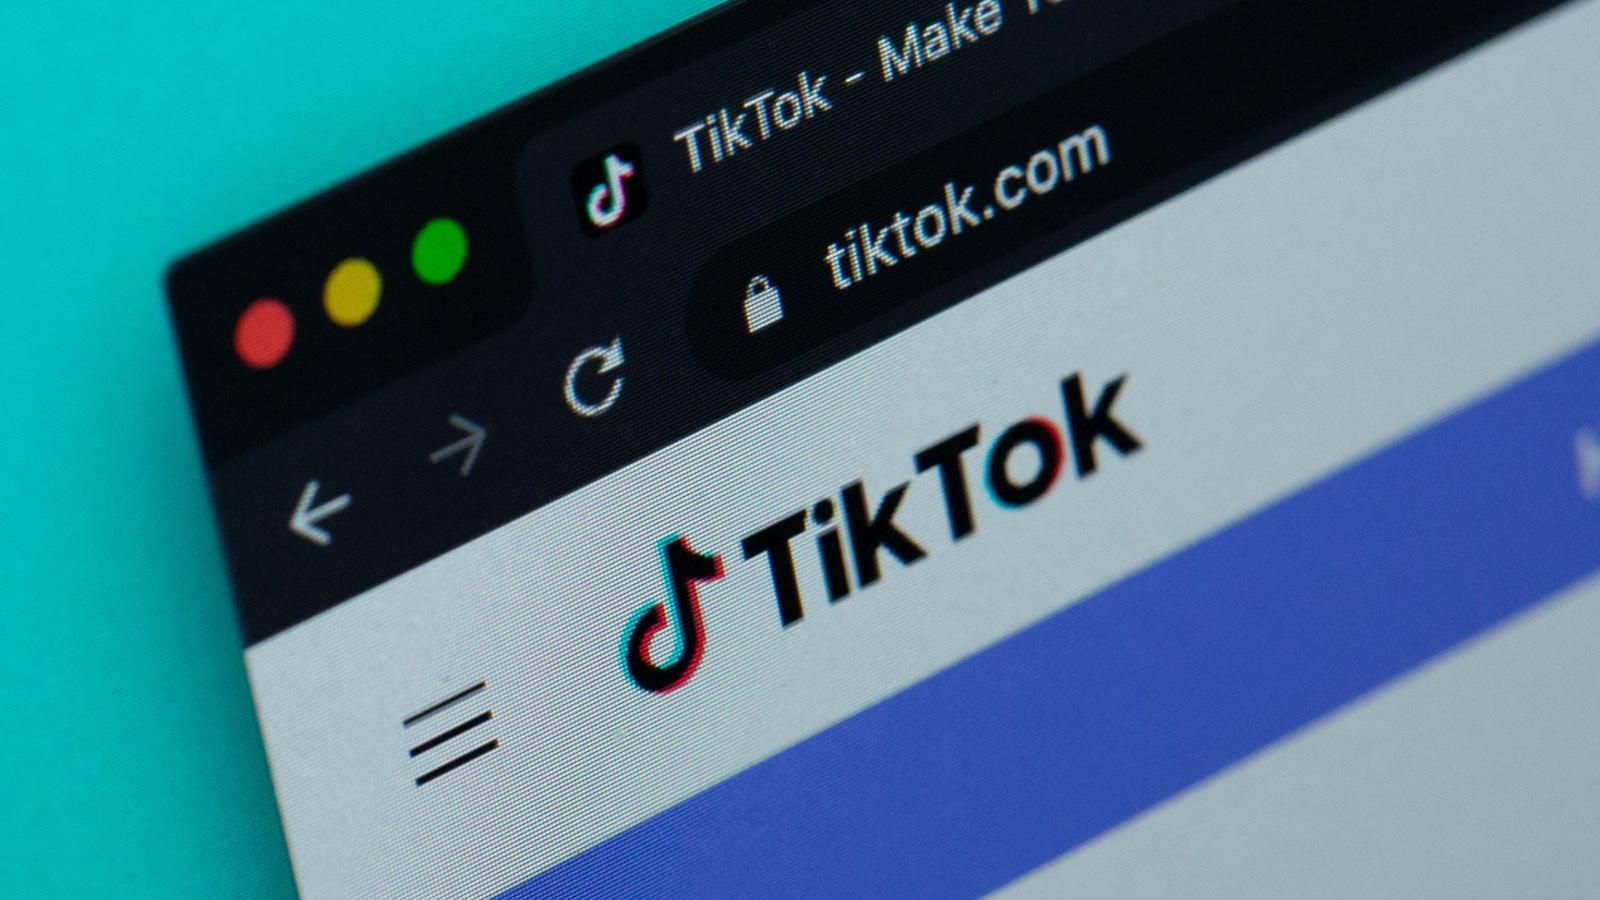 TikTok website on blue background